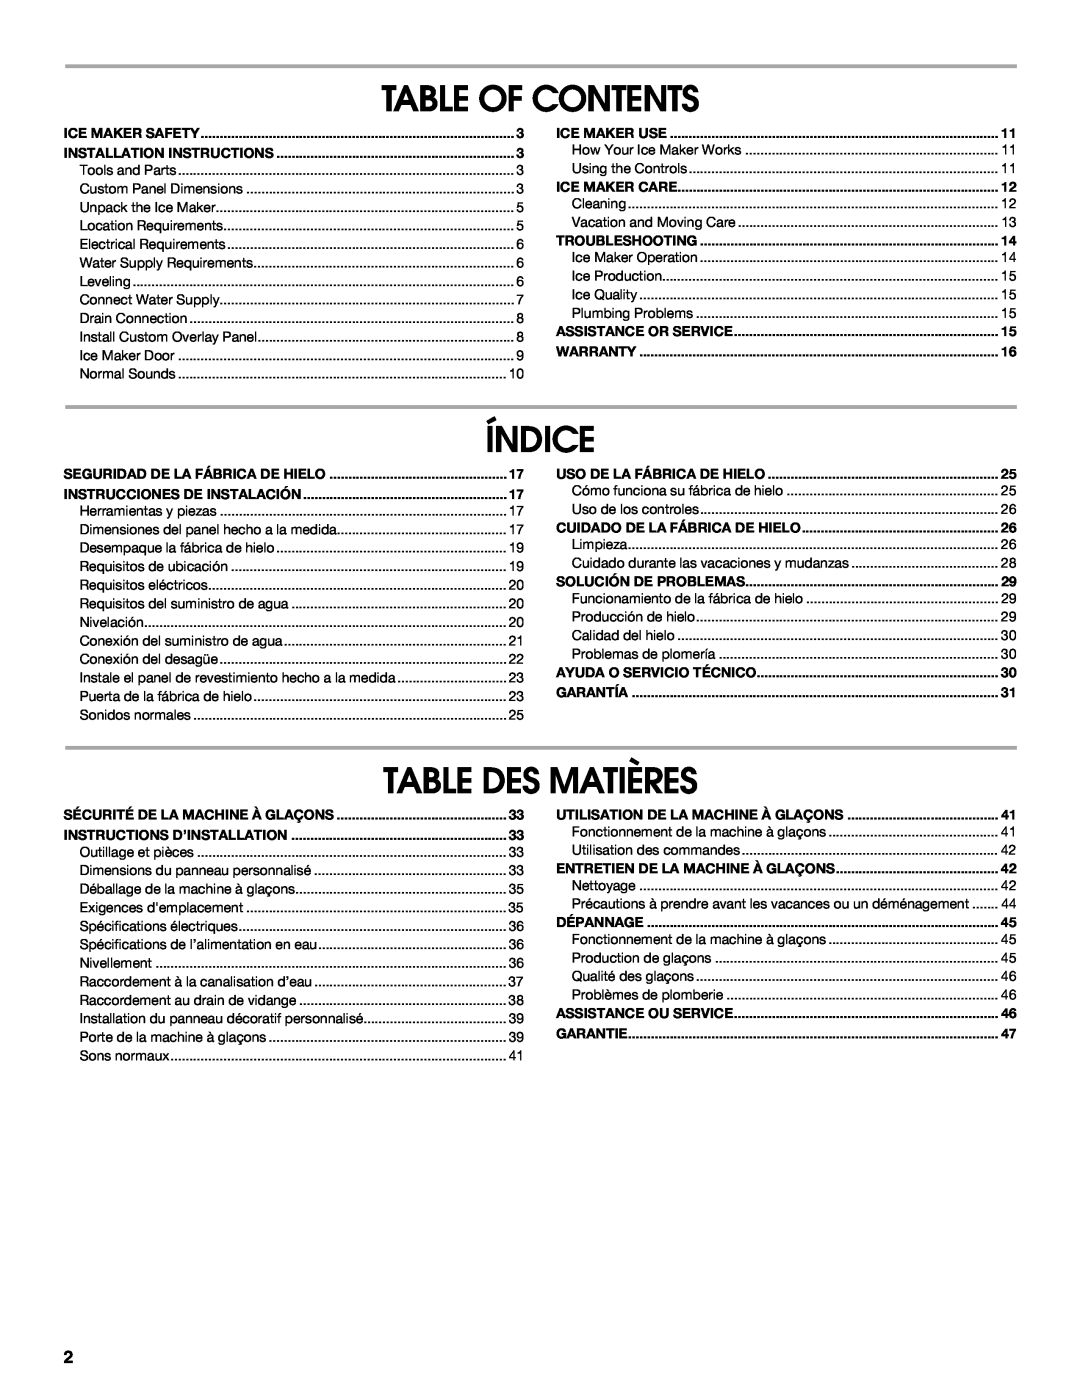 Jenn-Air W10282143B manual Table Of Contents, Índice, Table Des Matières, Seguridad De La Fábrica De Hielo 